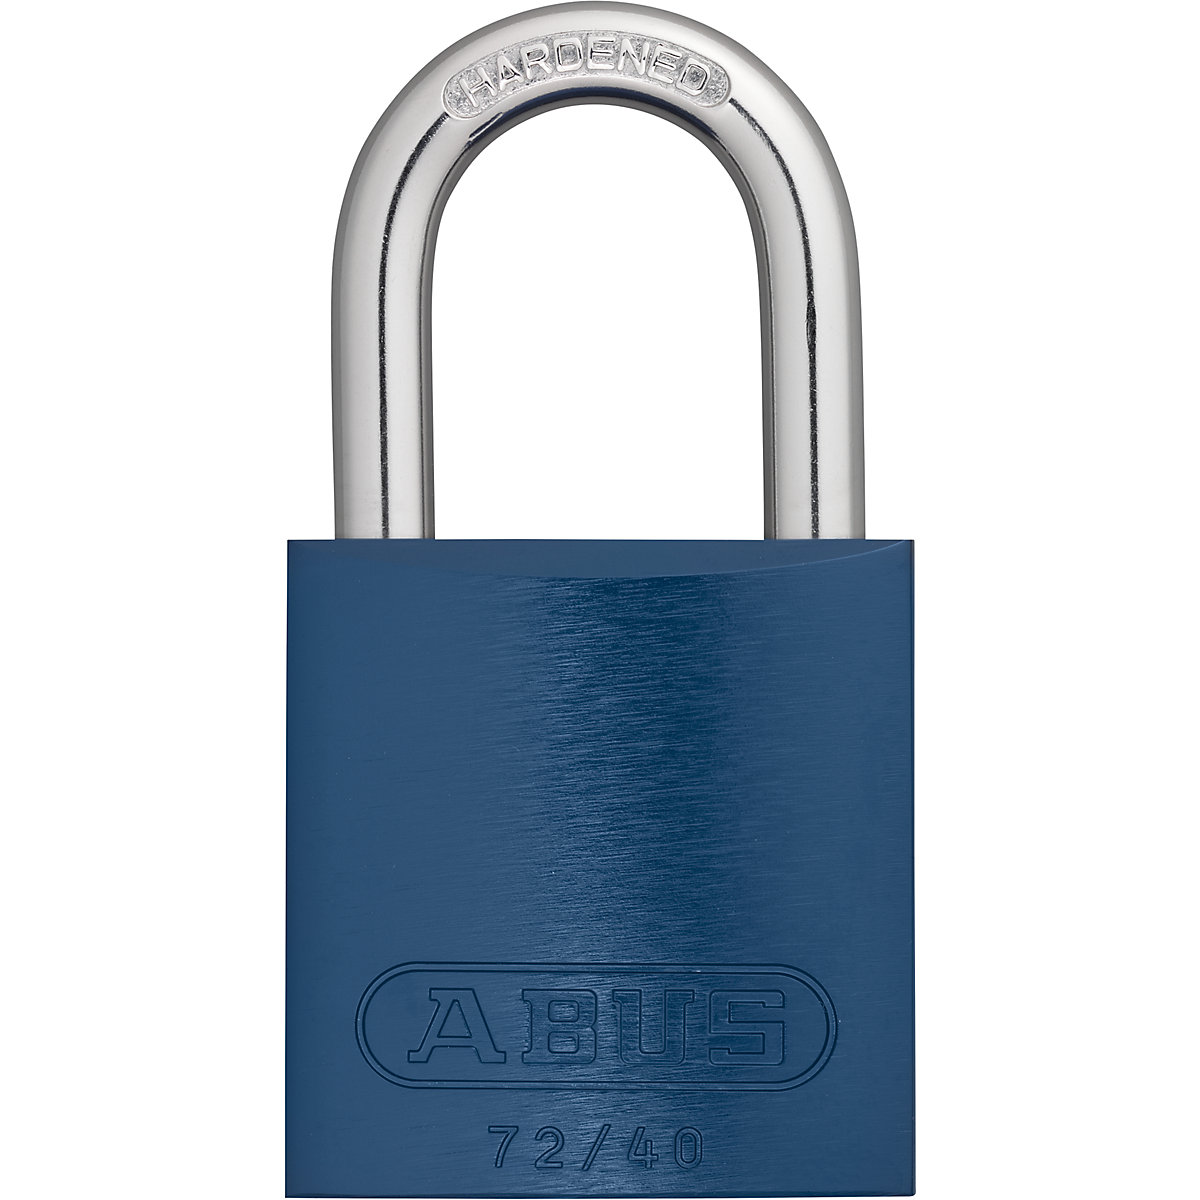 Cadenas, aluminium – ABUS, 72/40, lot de 6, bleu